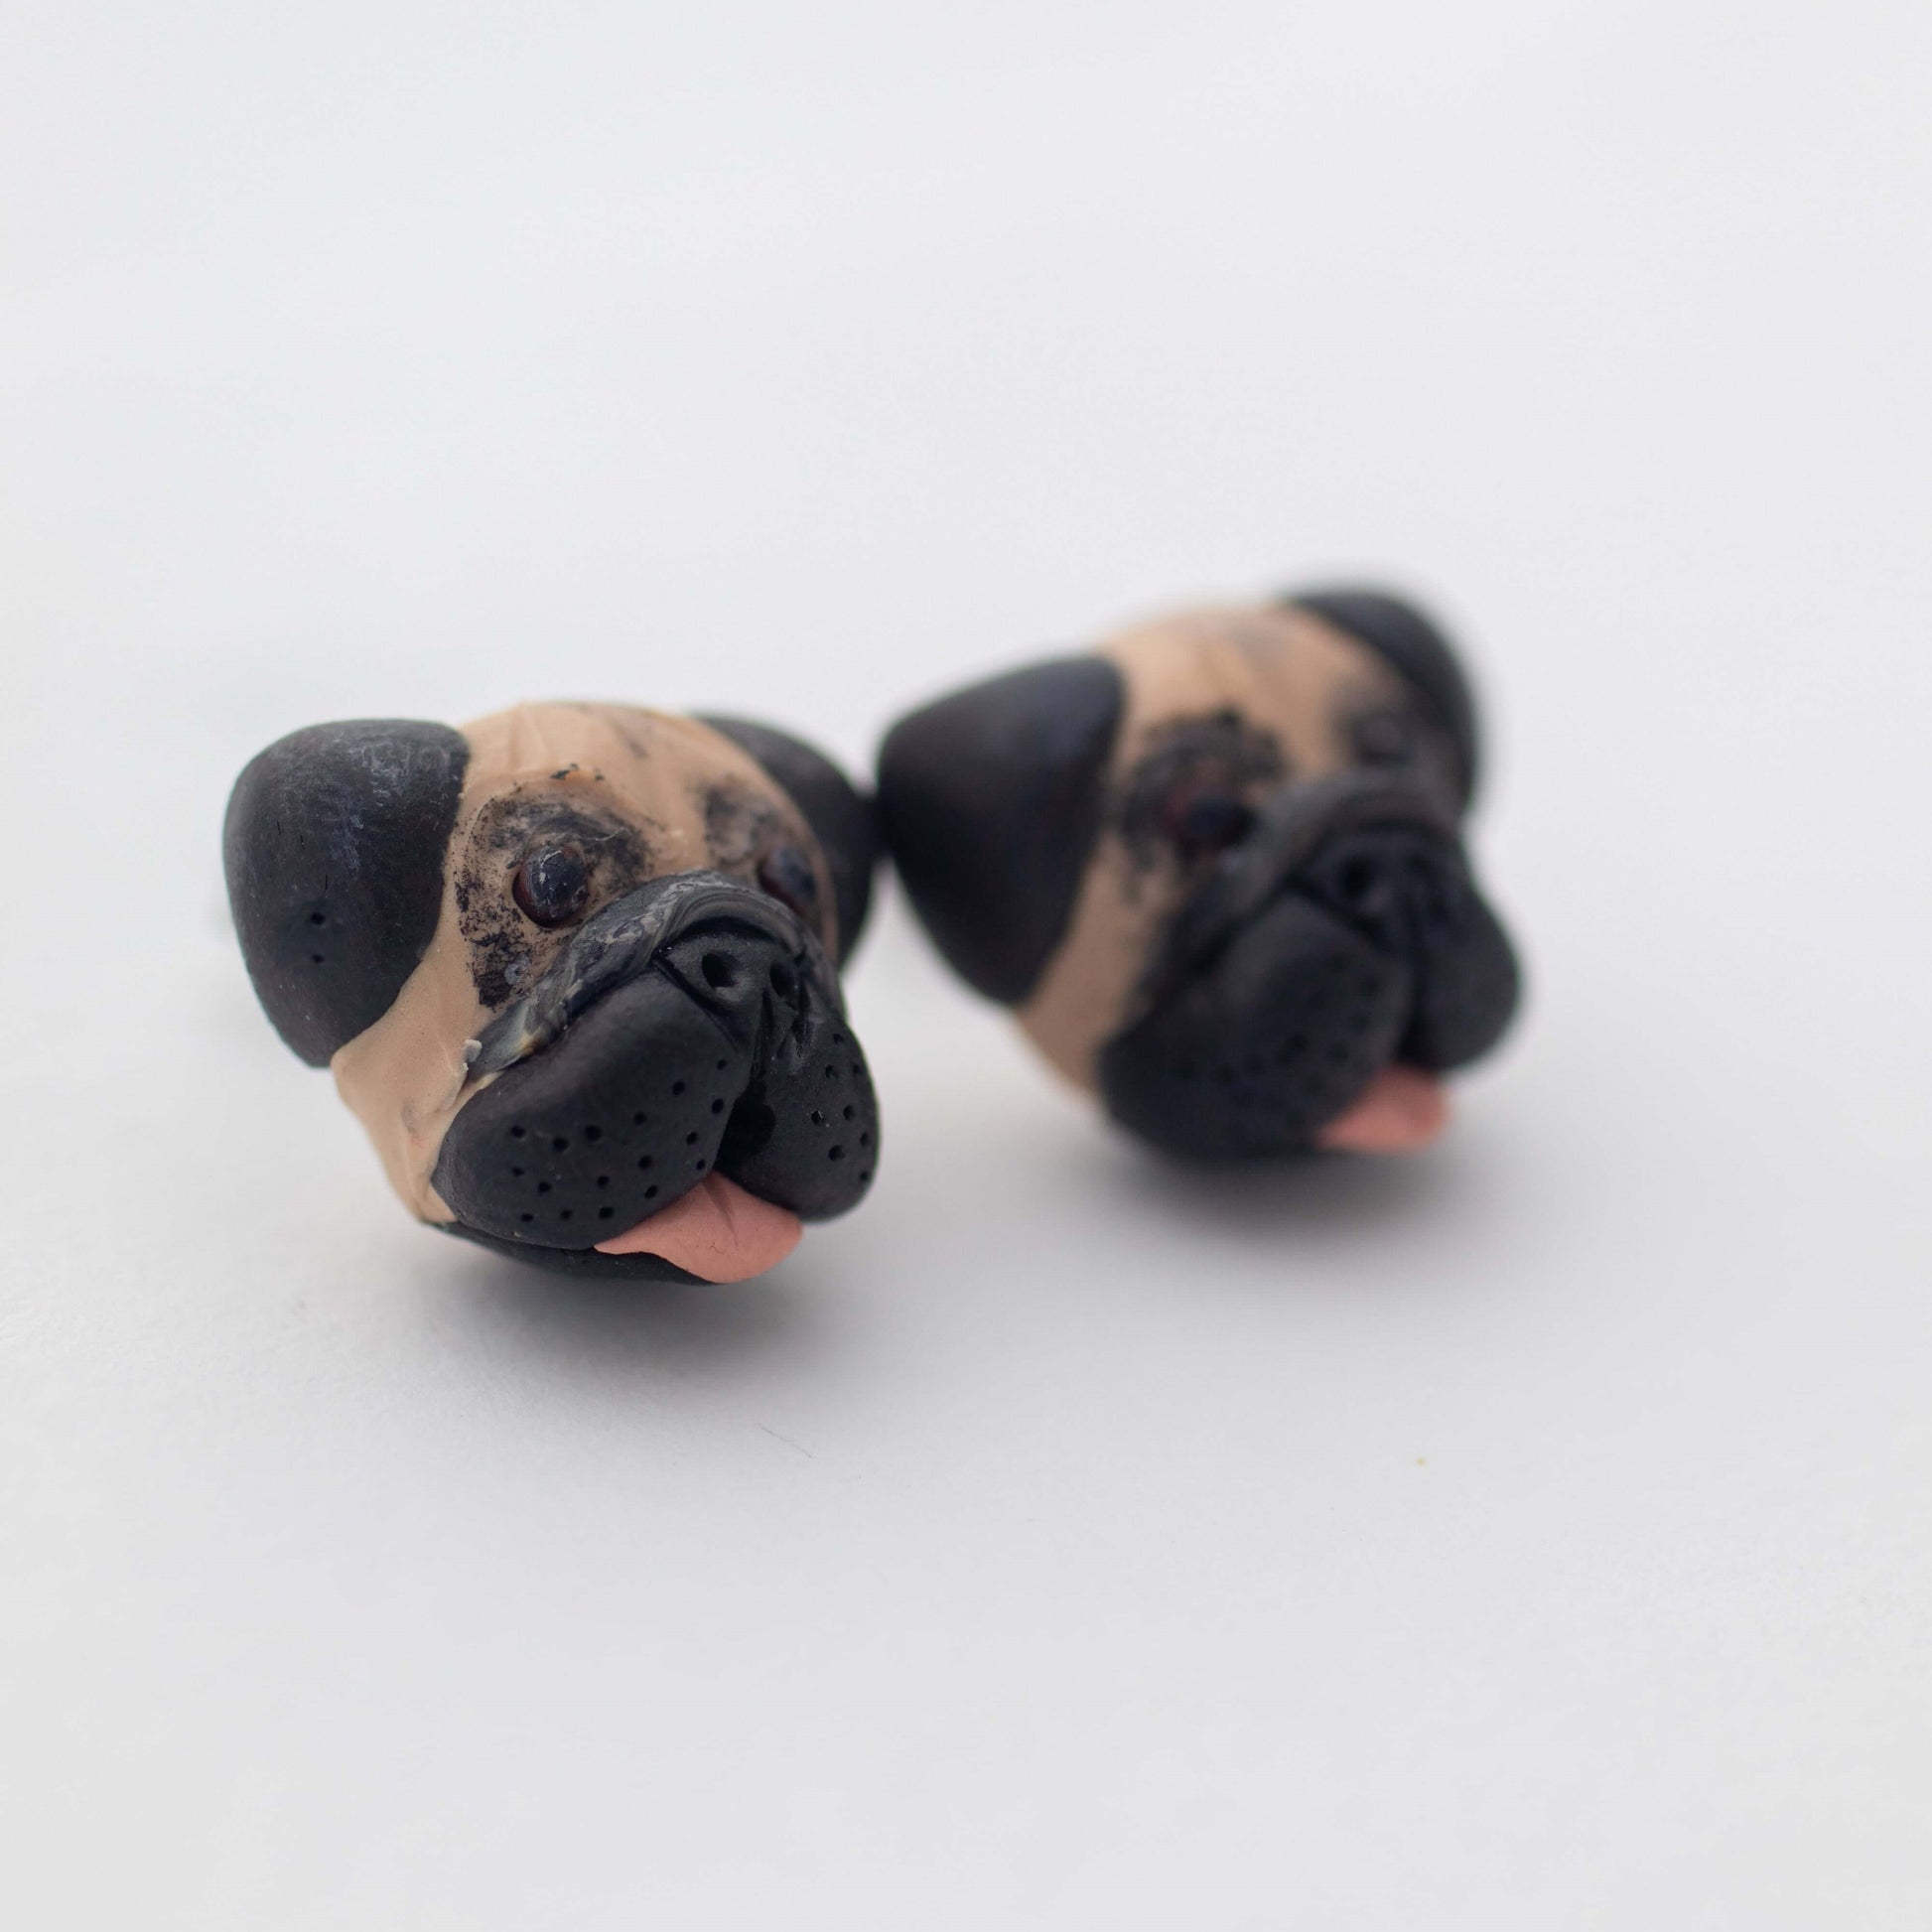 Handmade polymer clay pug stud earrings shown off card up close